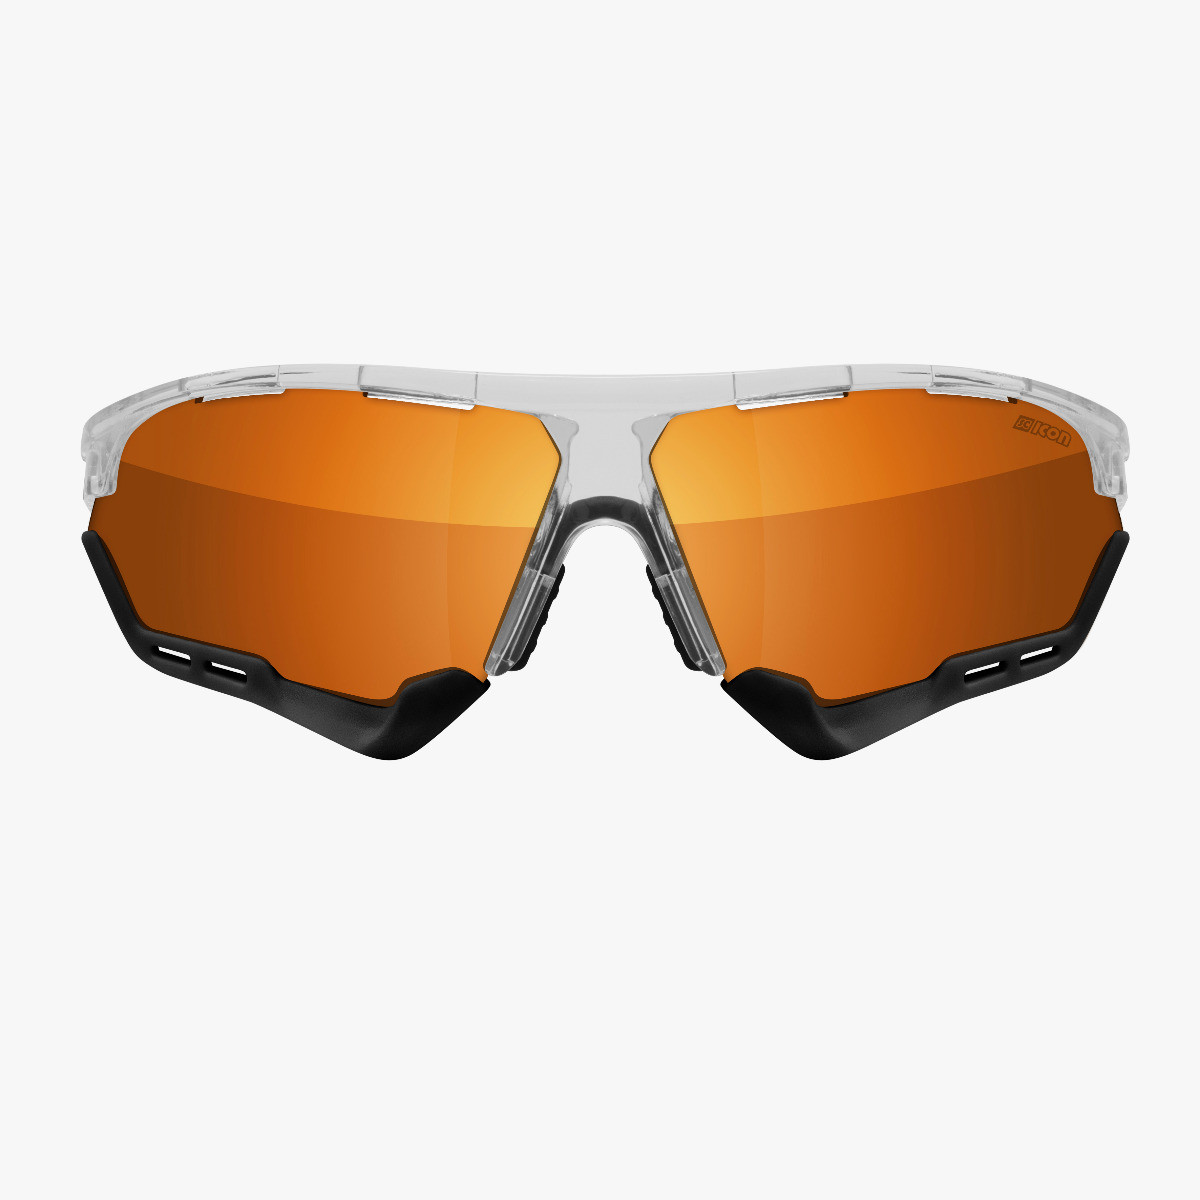 Scicon Sports | Aerocomfort Sport Cycling Performance Sunglasses - Crystal / Bronze - EY15070701
